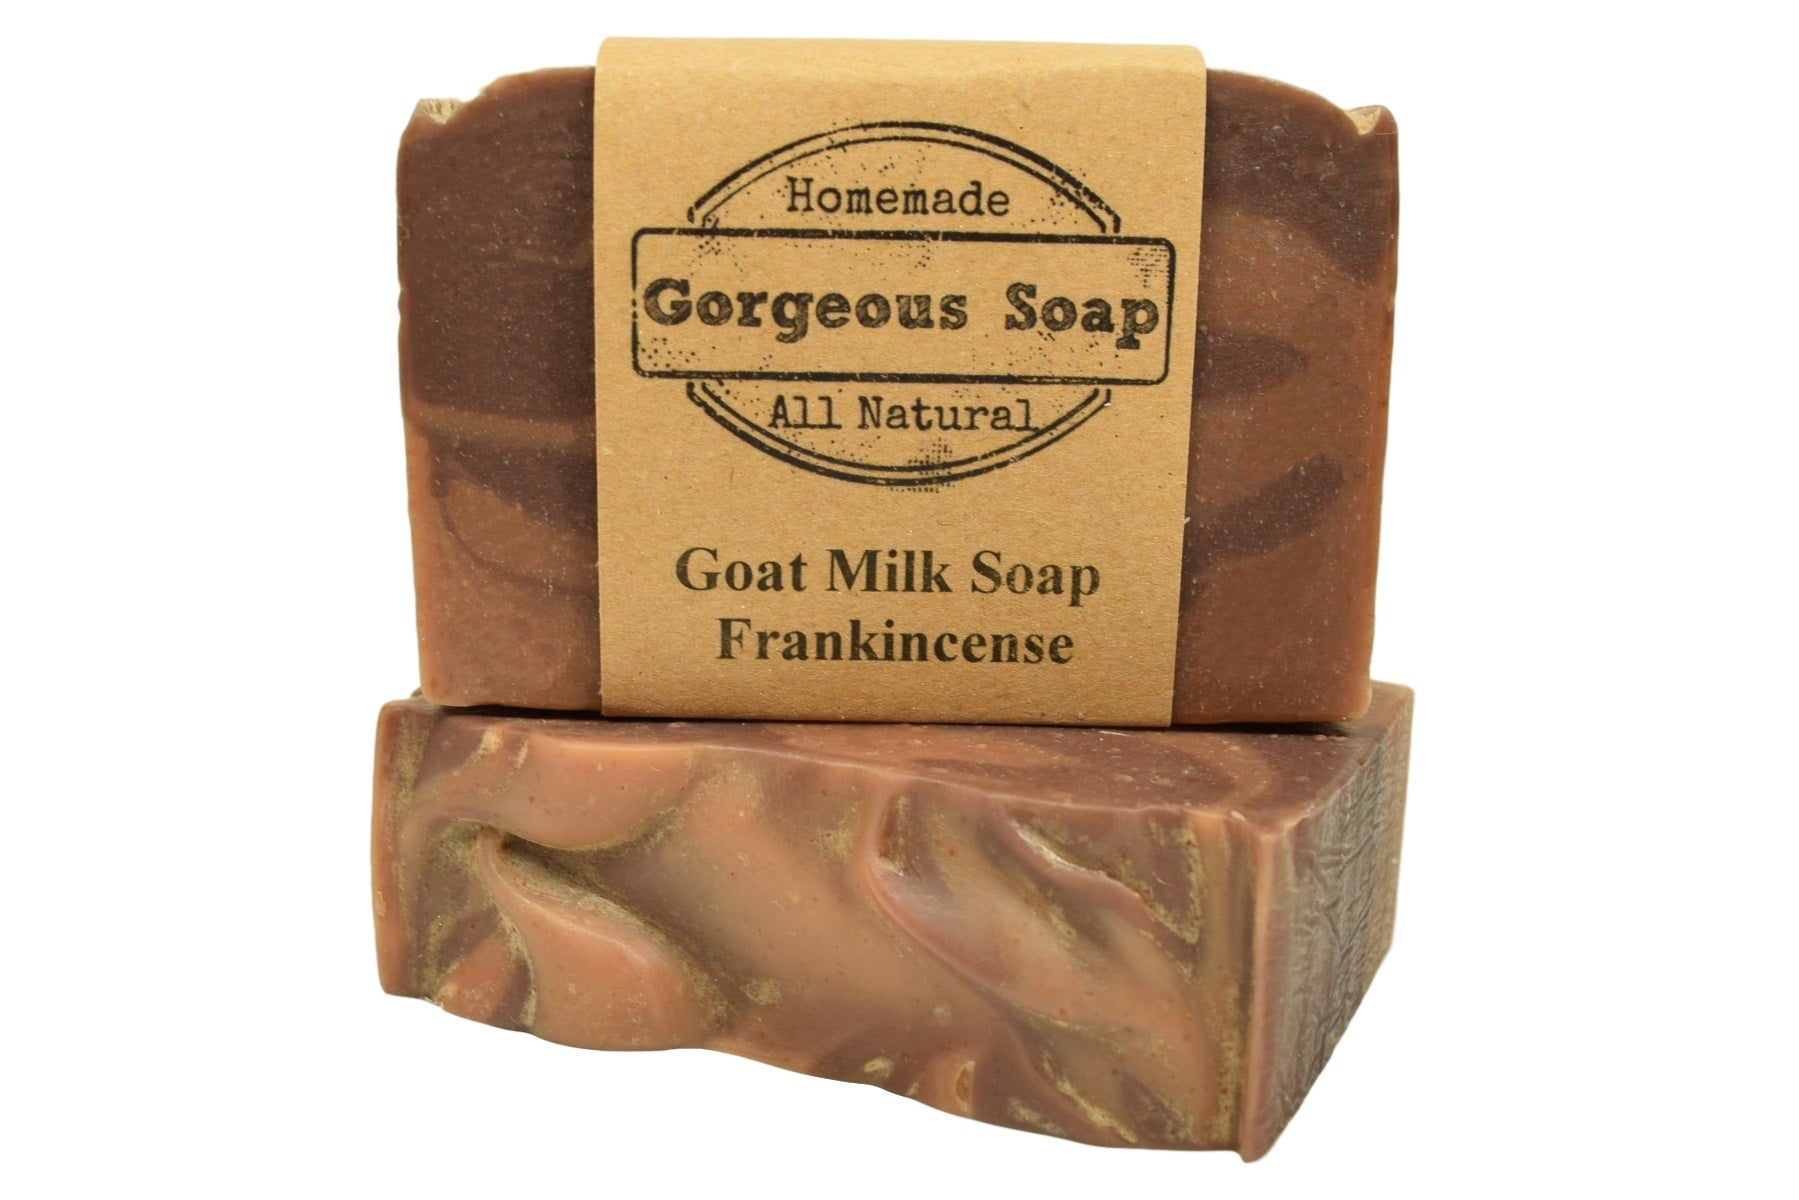 Frankincense and Myrrh Goat Milk Soap